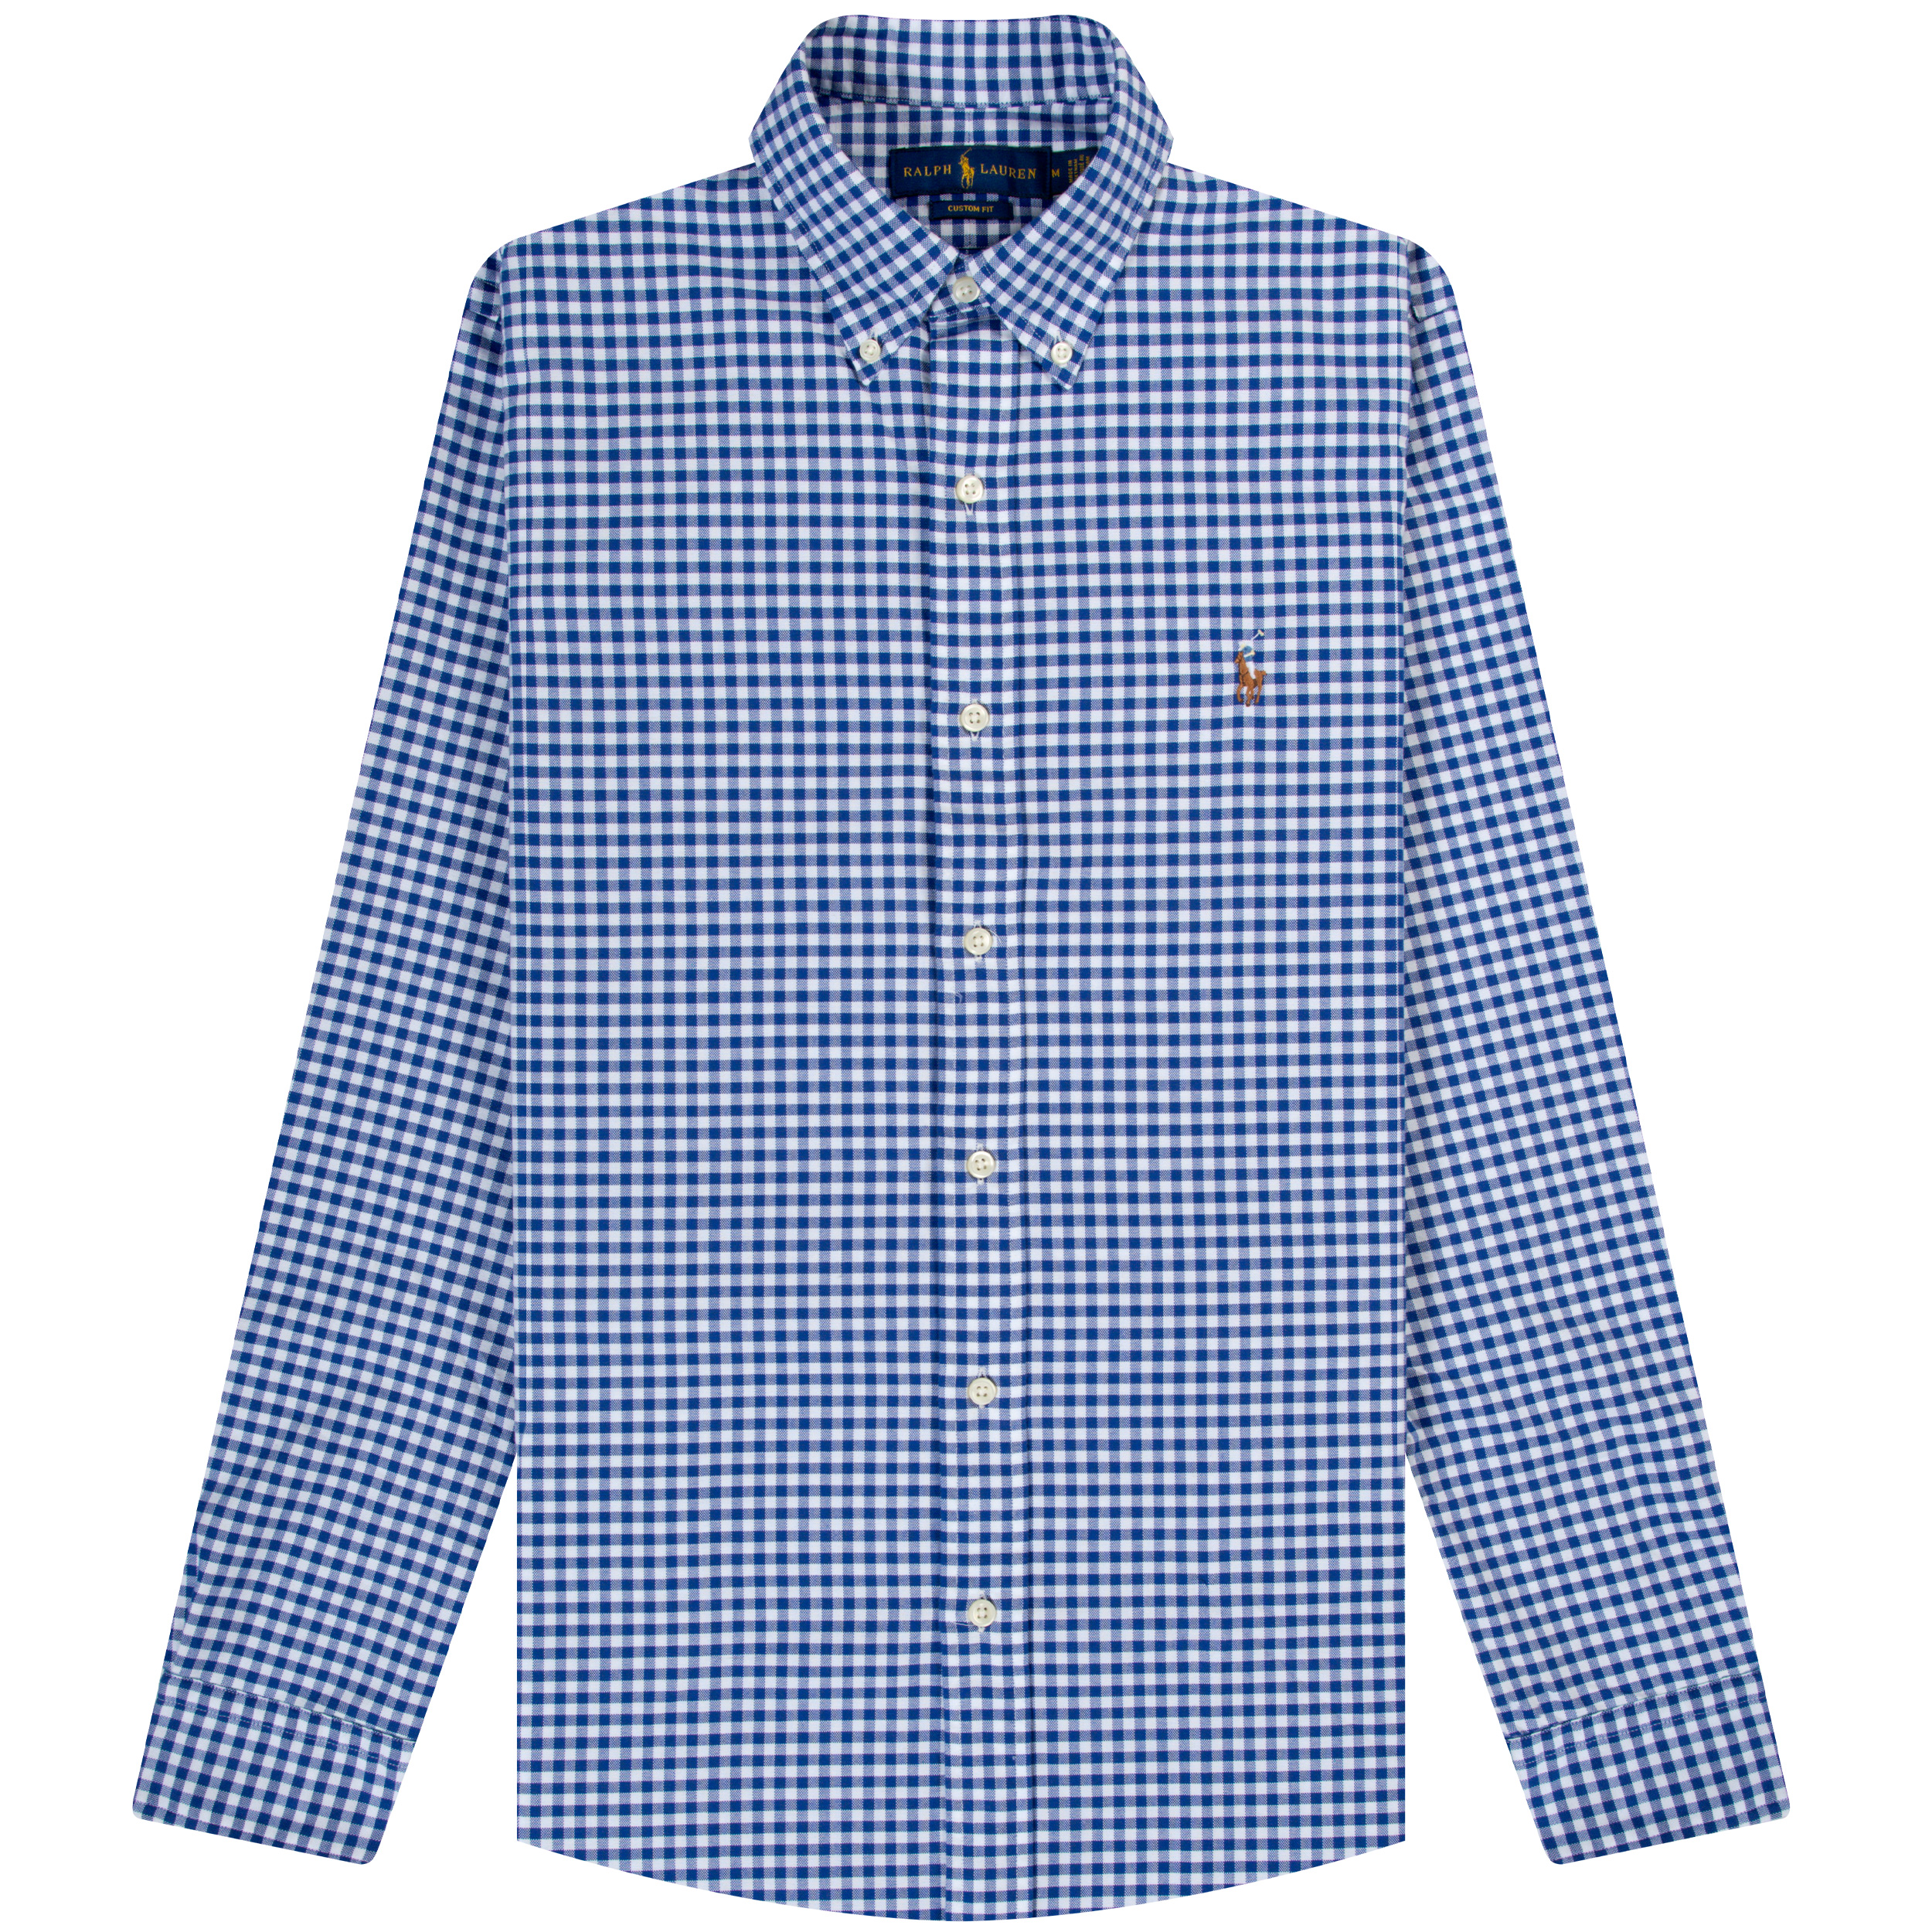 Ralph Lauren SS22 Gingham Check Oxford Shirt Blue/White